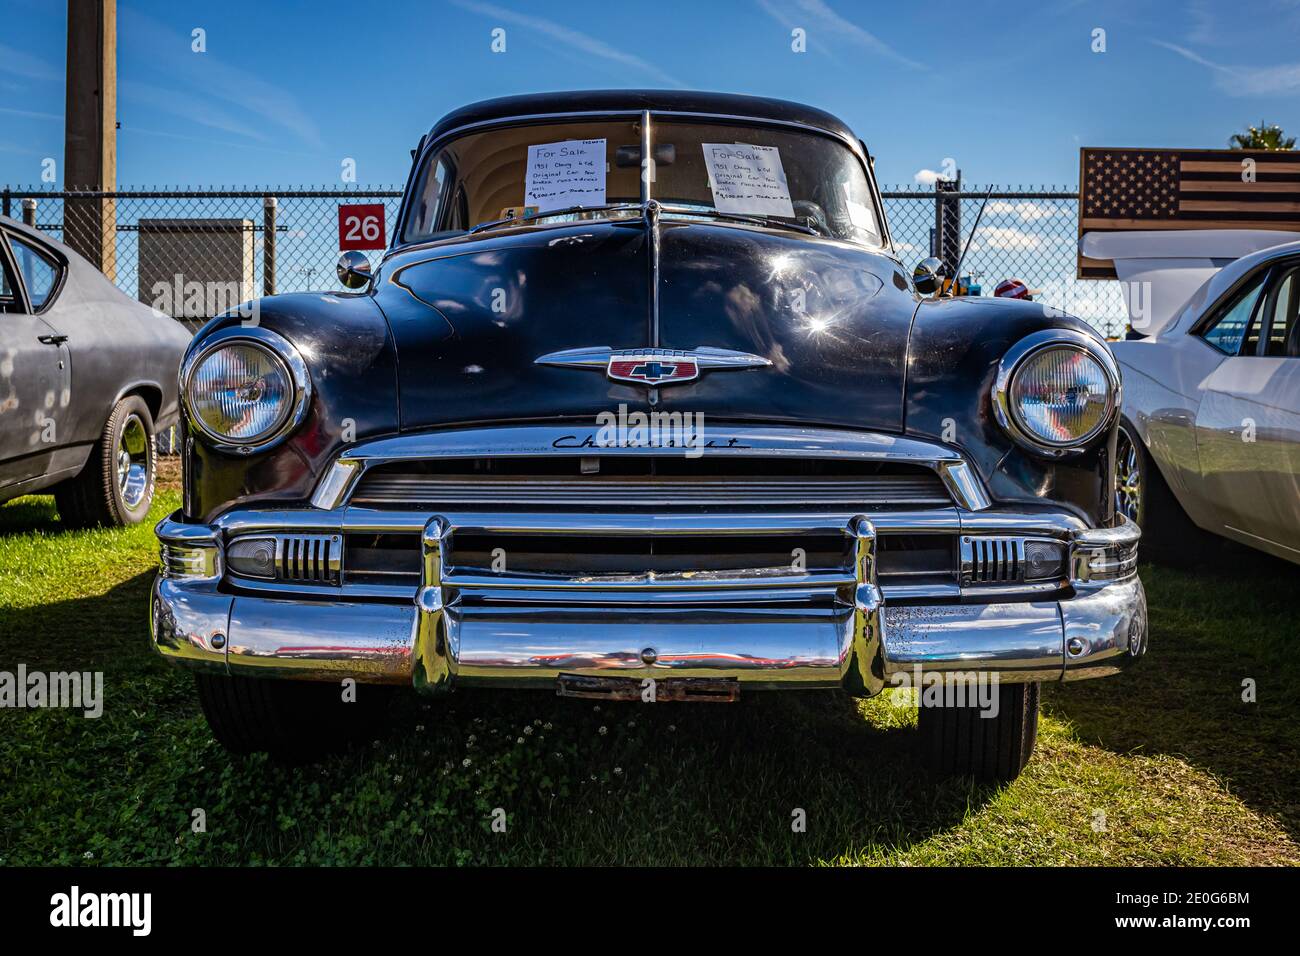 Daytona Beach, FL - November 28, 2020: 1951 Chevrolet DeLuxe at a local car show. Stock Photo